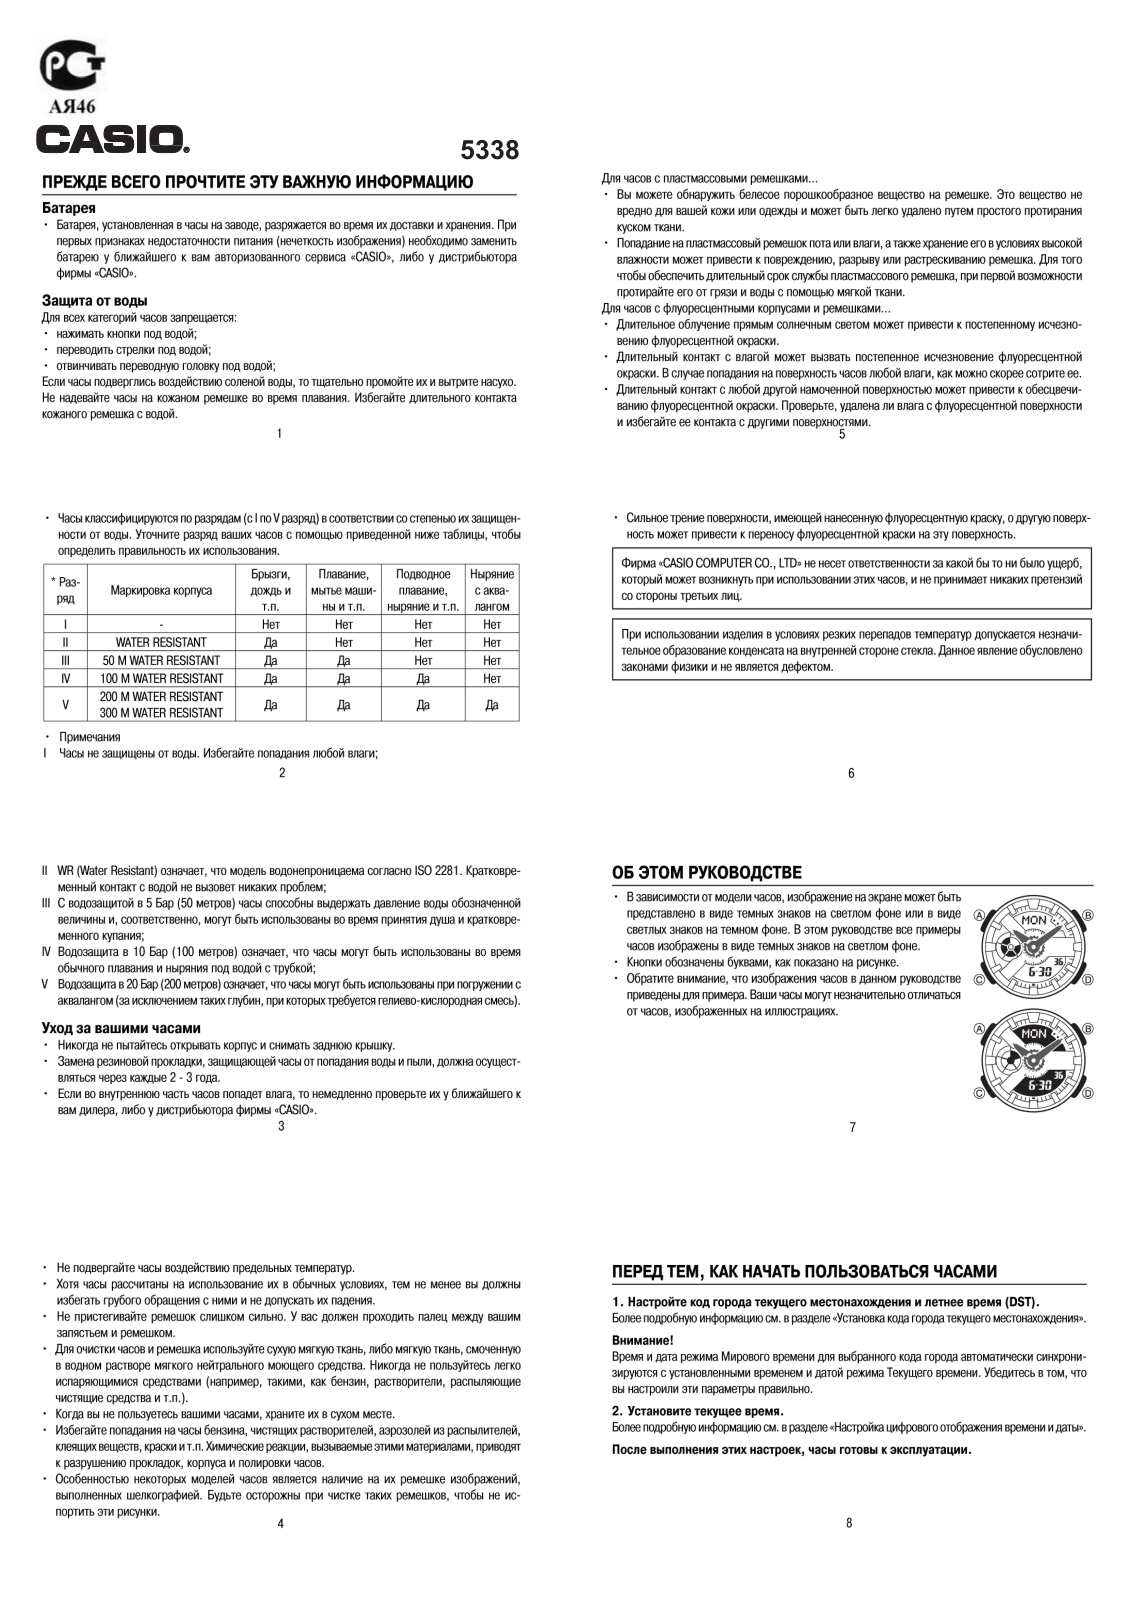 Casio BA-110TX-1A User Manual